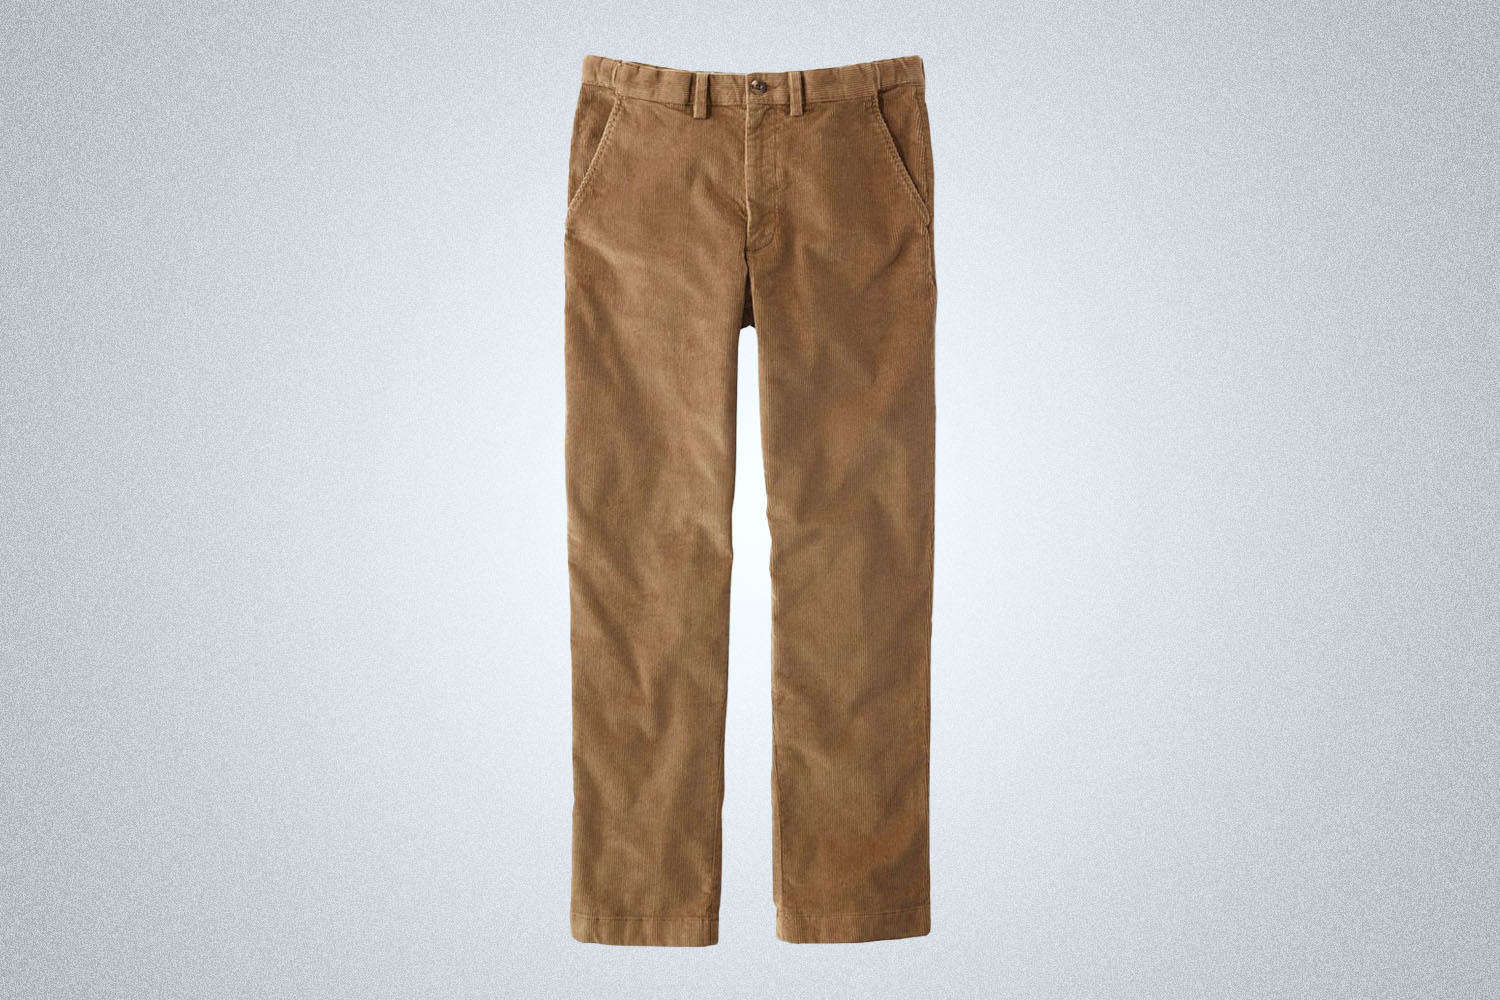 a pair of corduroy pants 